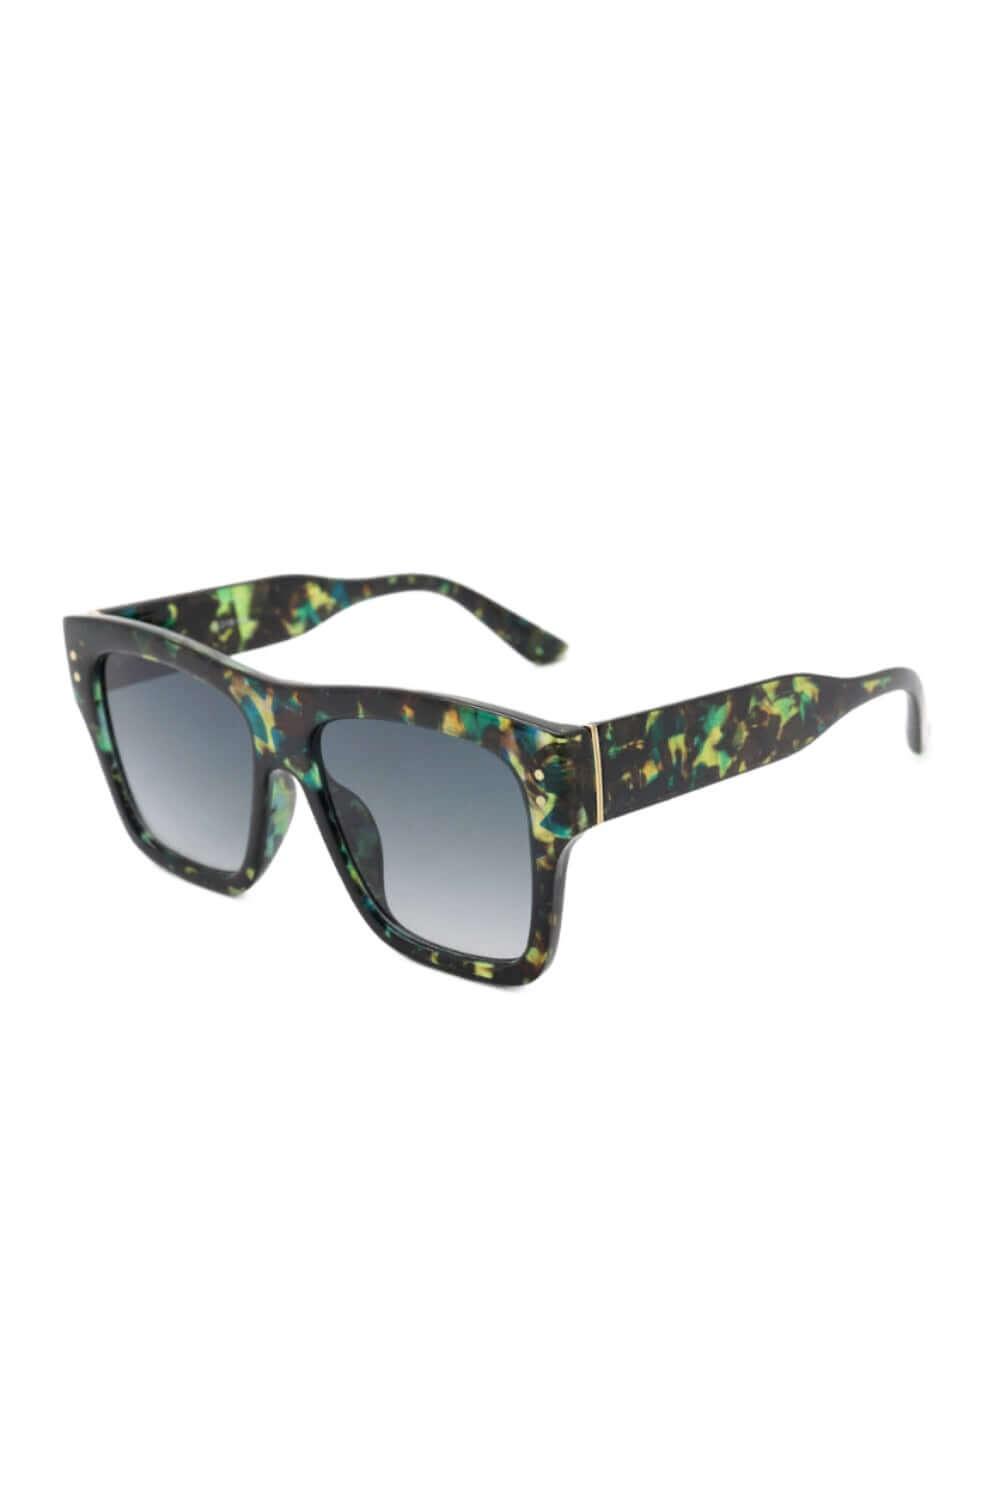 Comfort UV400 Patterned Polycarbonate Square Sunglasses - Samslivos